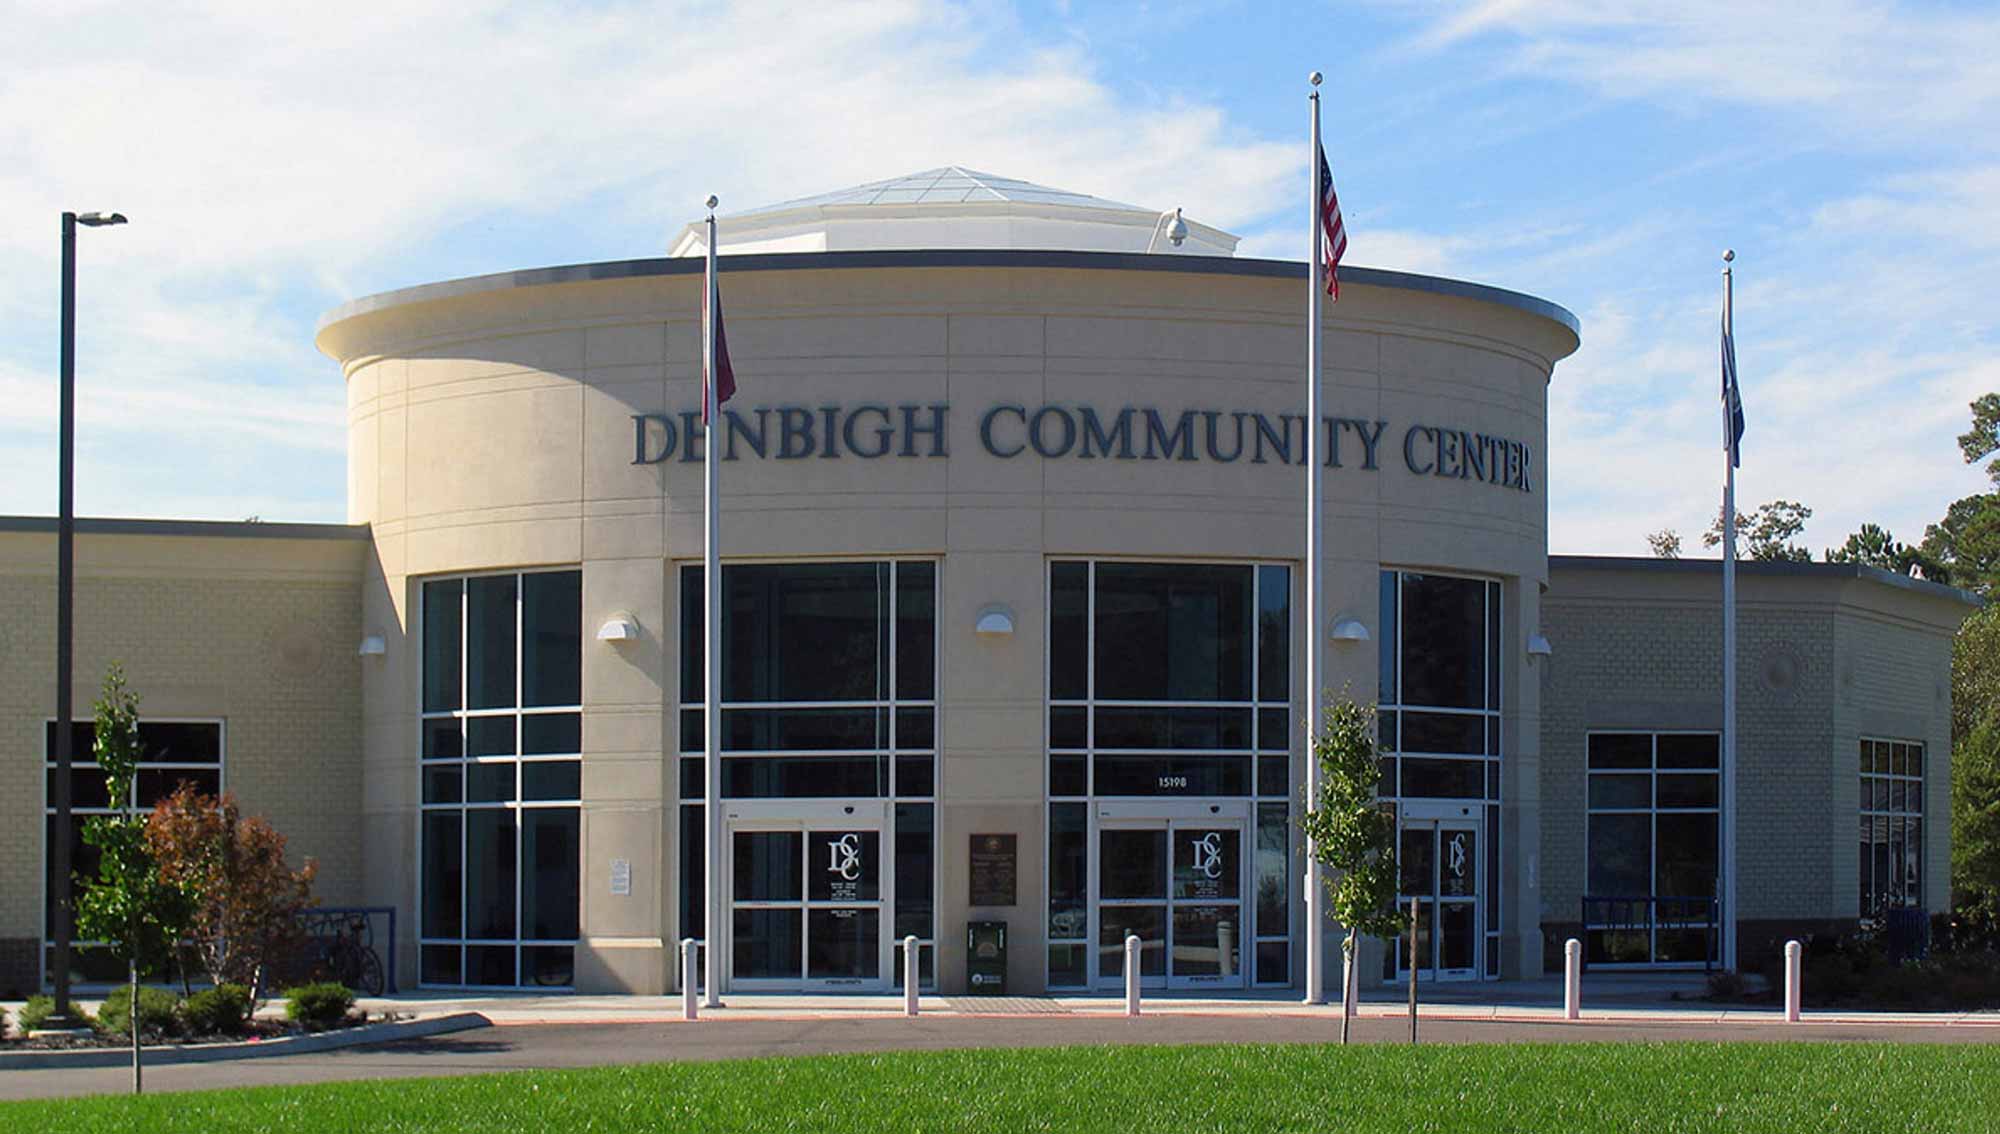 Denbigh Community Center 1